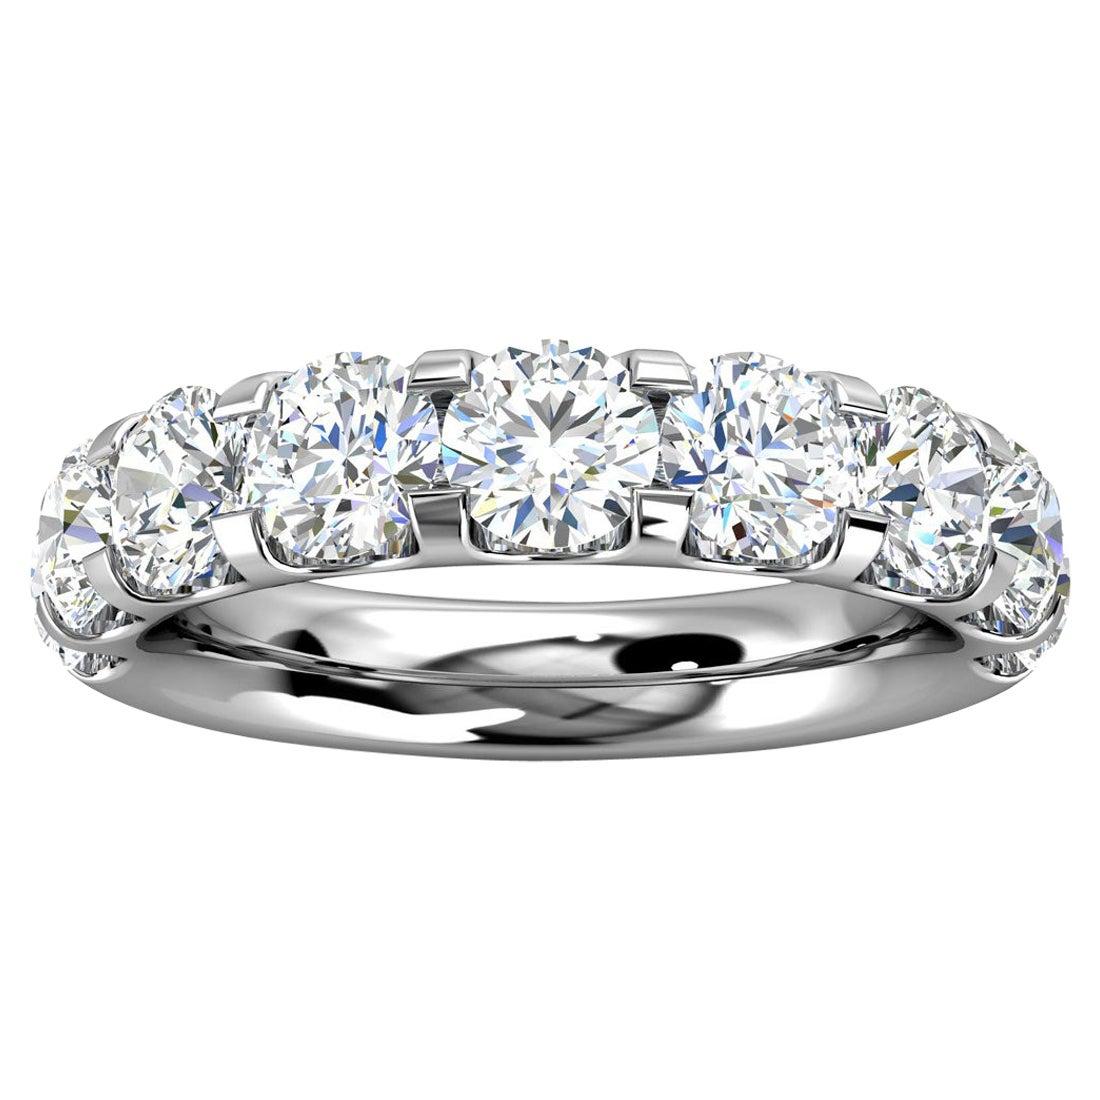 For Sale:  14k White Gold Valerie Micro-Prong Diamond Ring '2 Ct. tw' 2